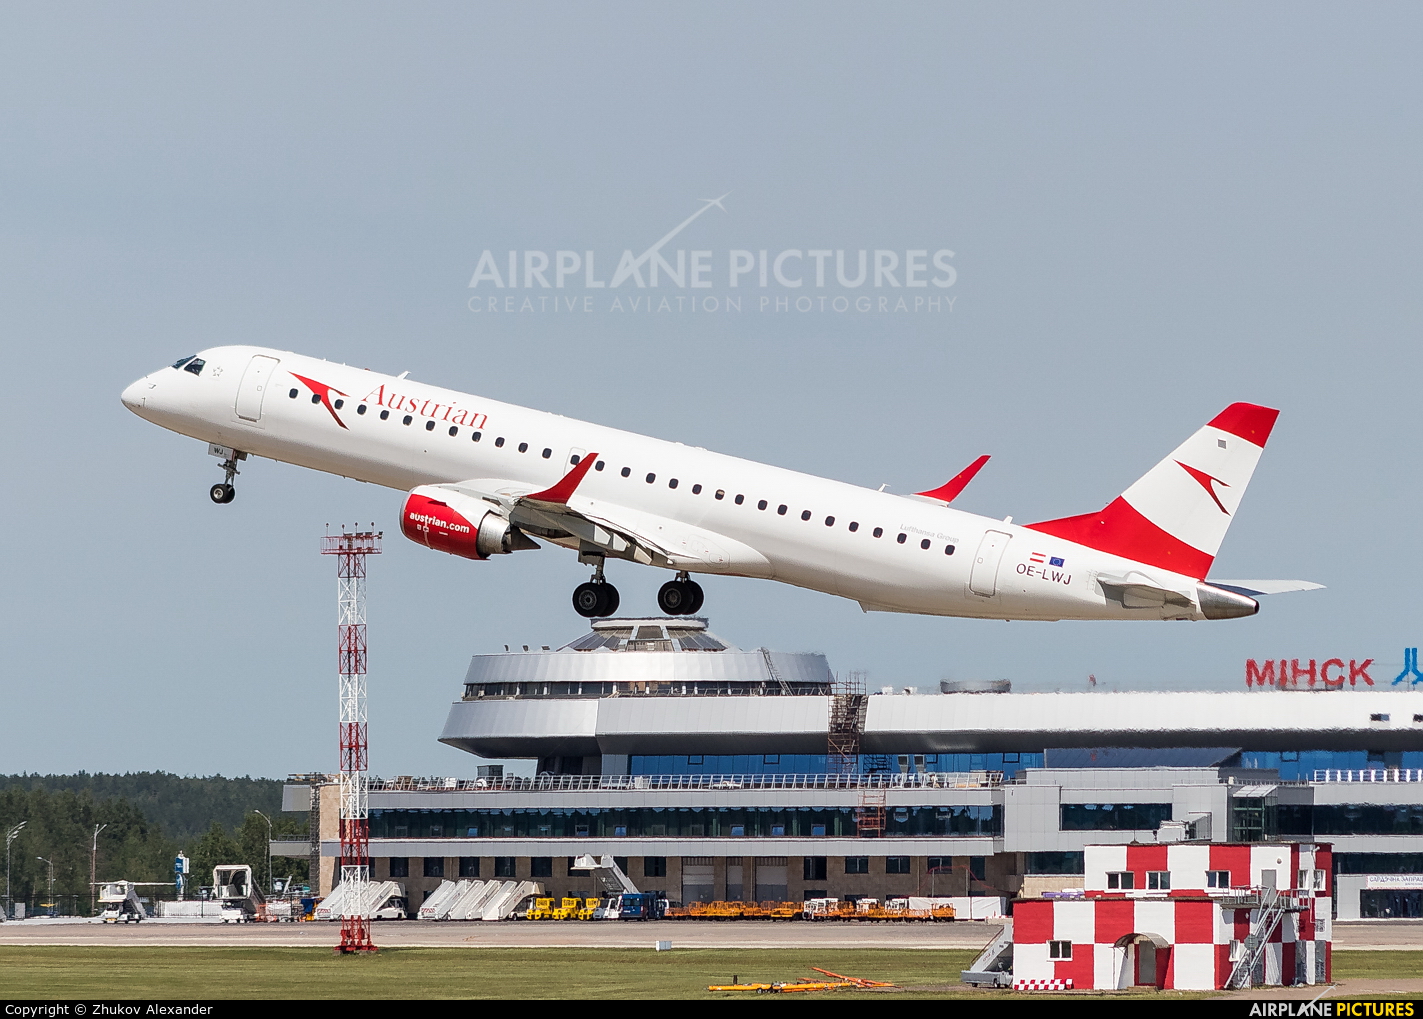 Austrian Airlines/Arrows/Tyrolean OE-LWJ aircraft at Minsk Intl